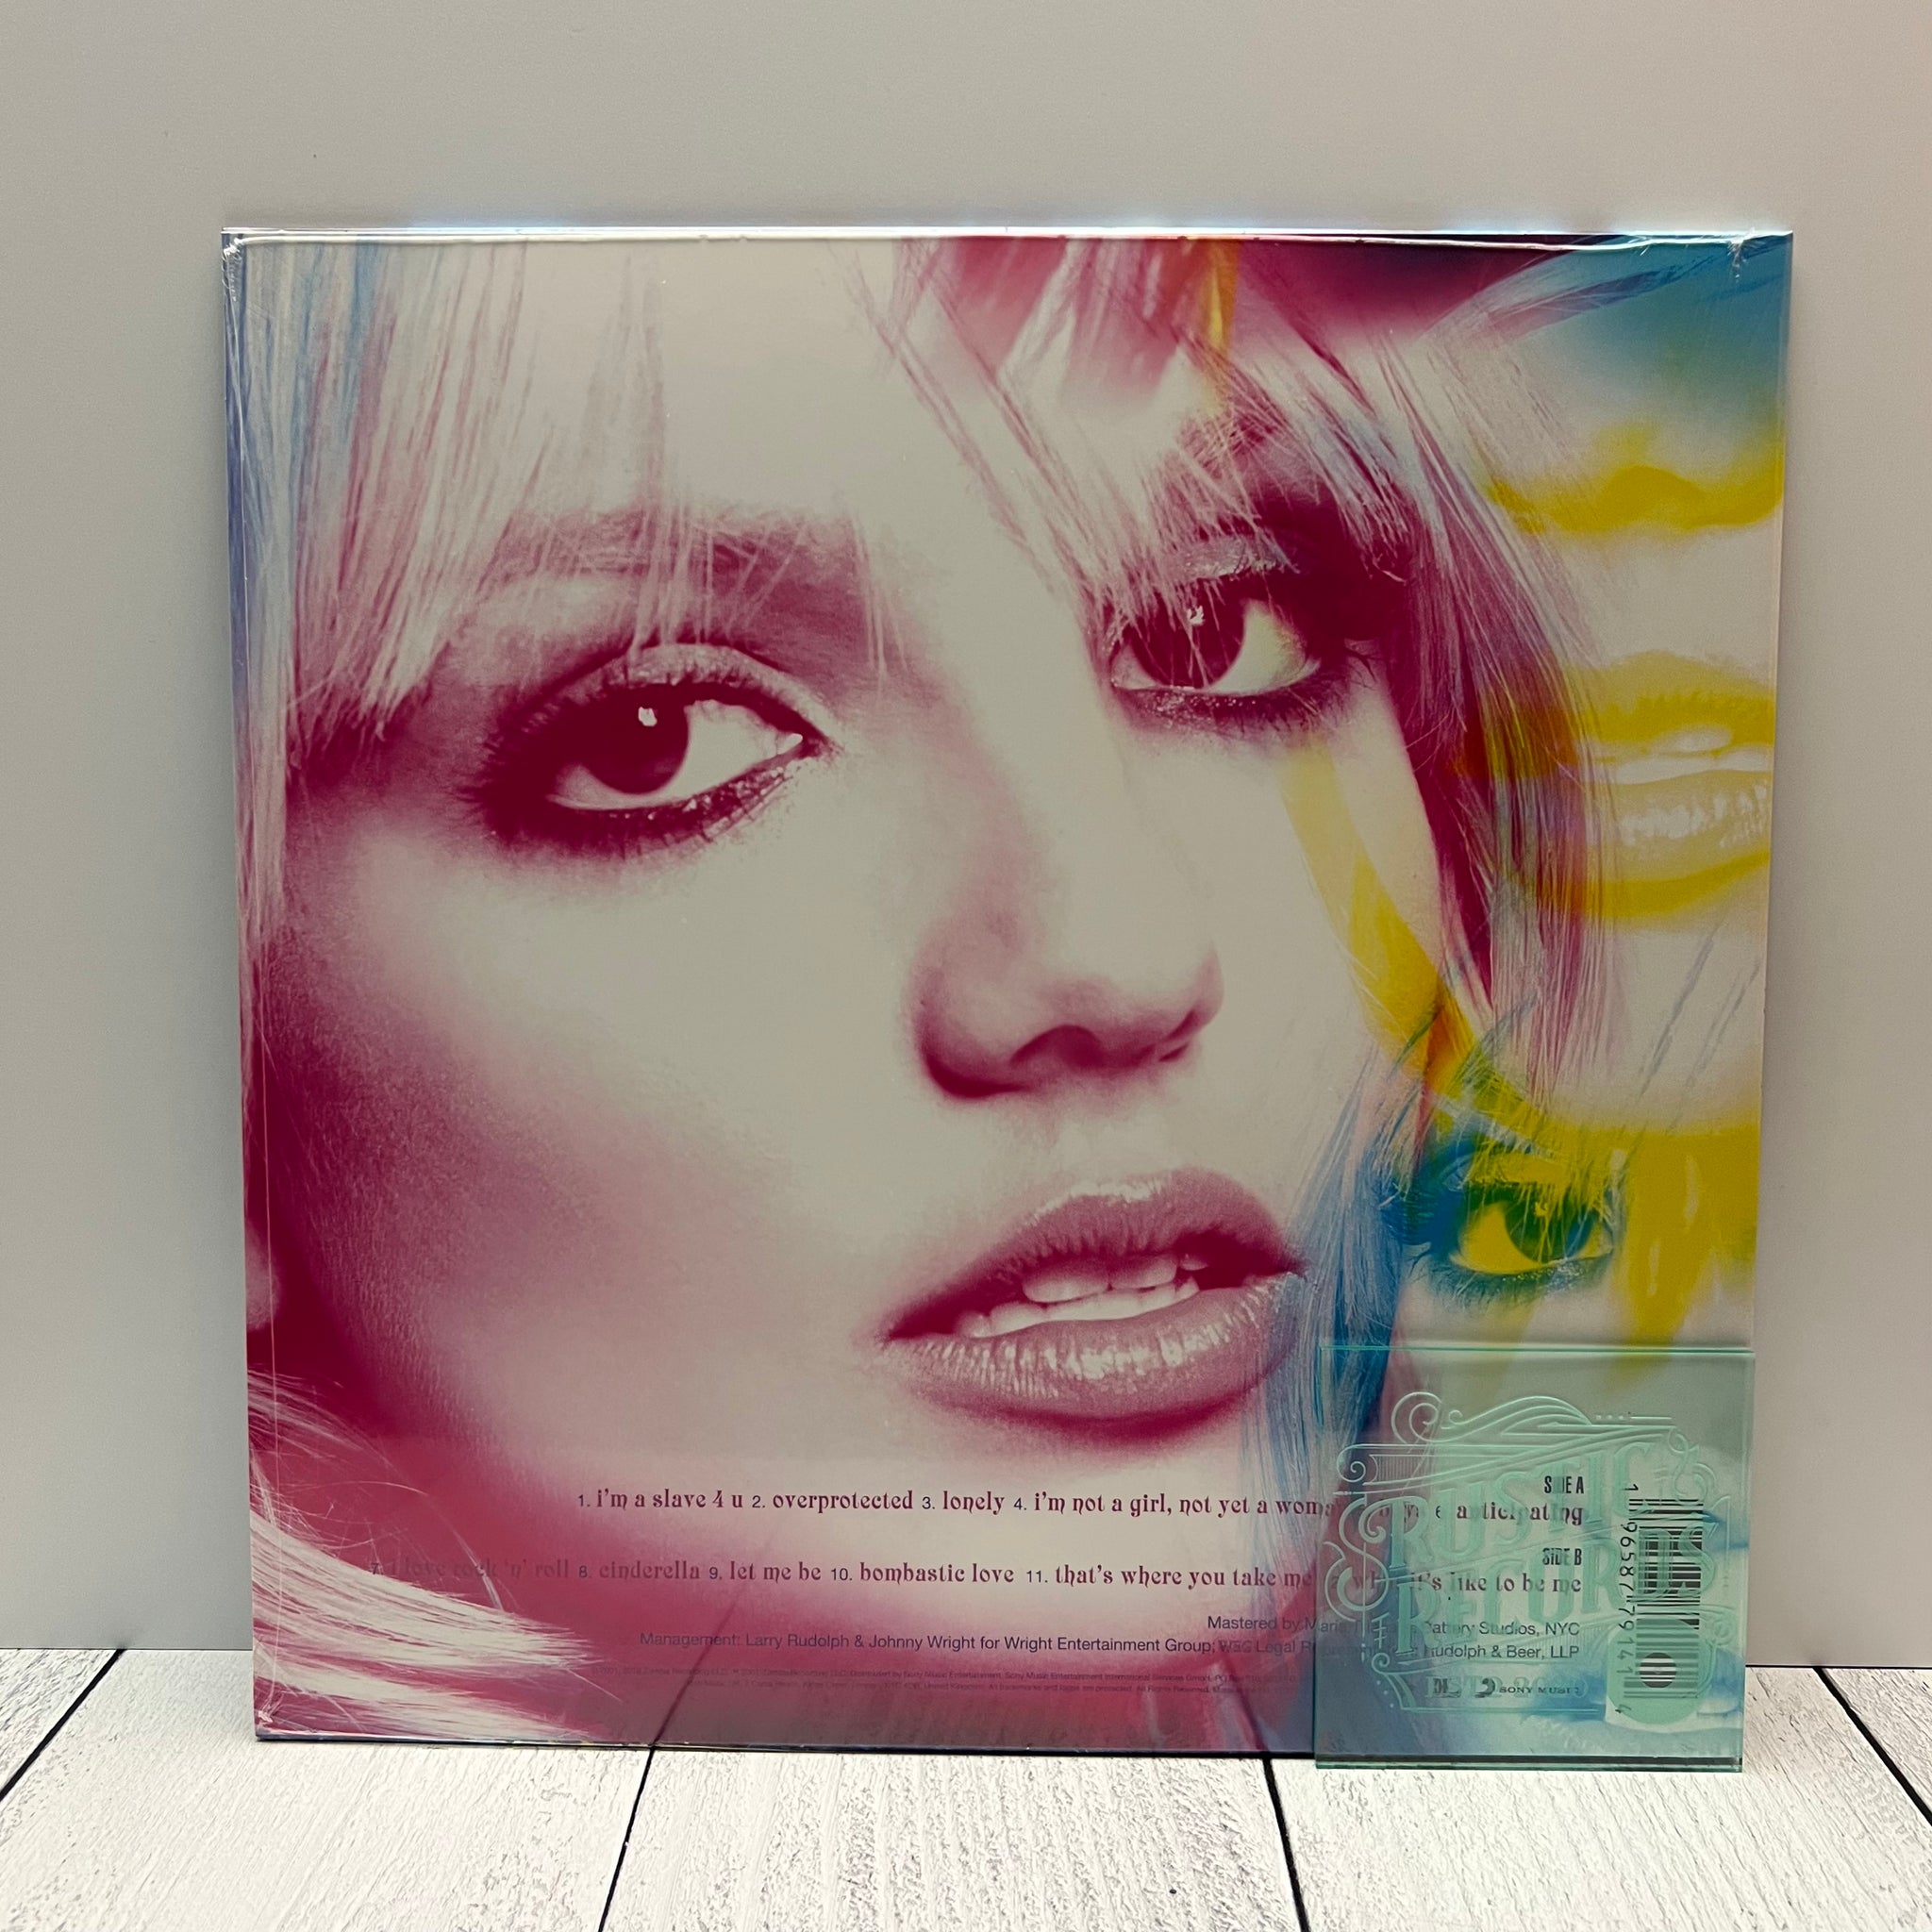 Britney Spears - Britney (Yellow Vinyl)